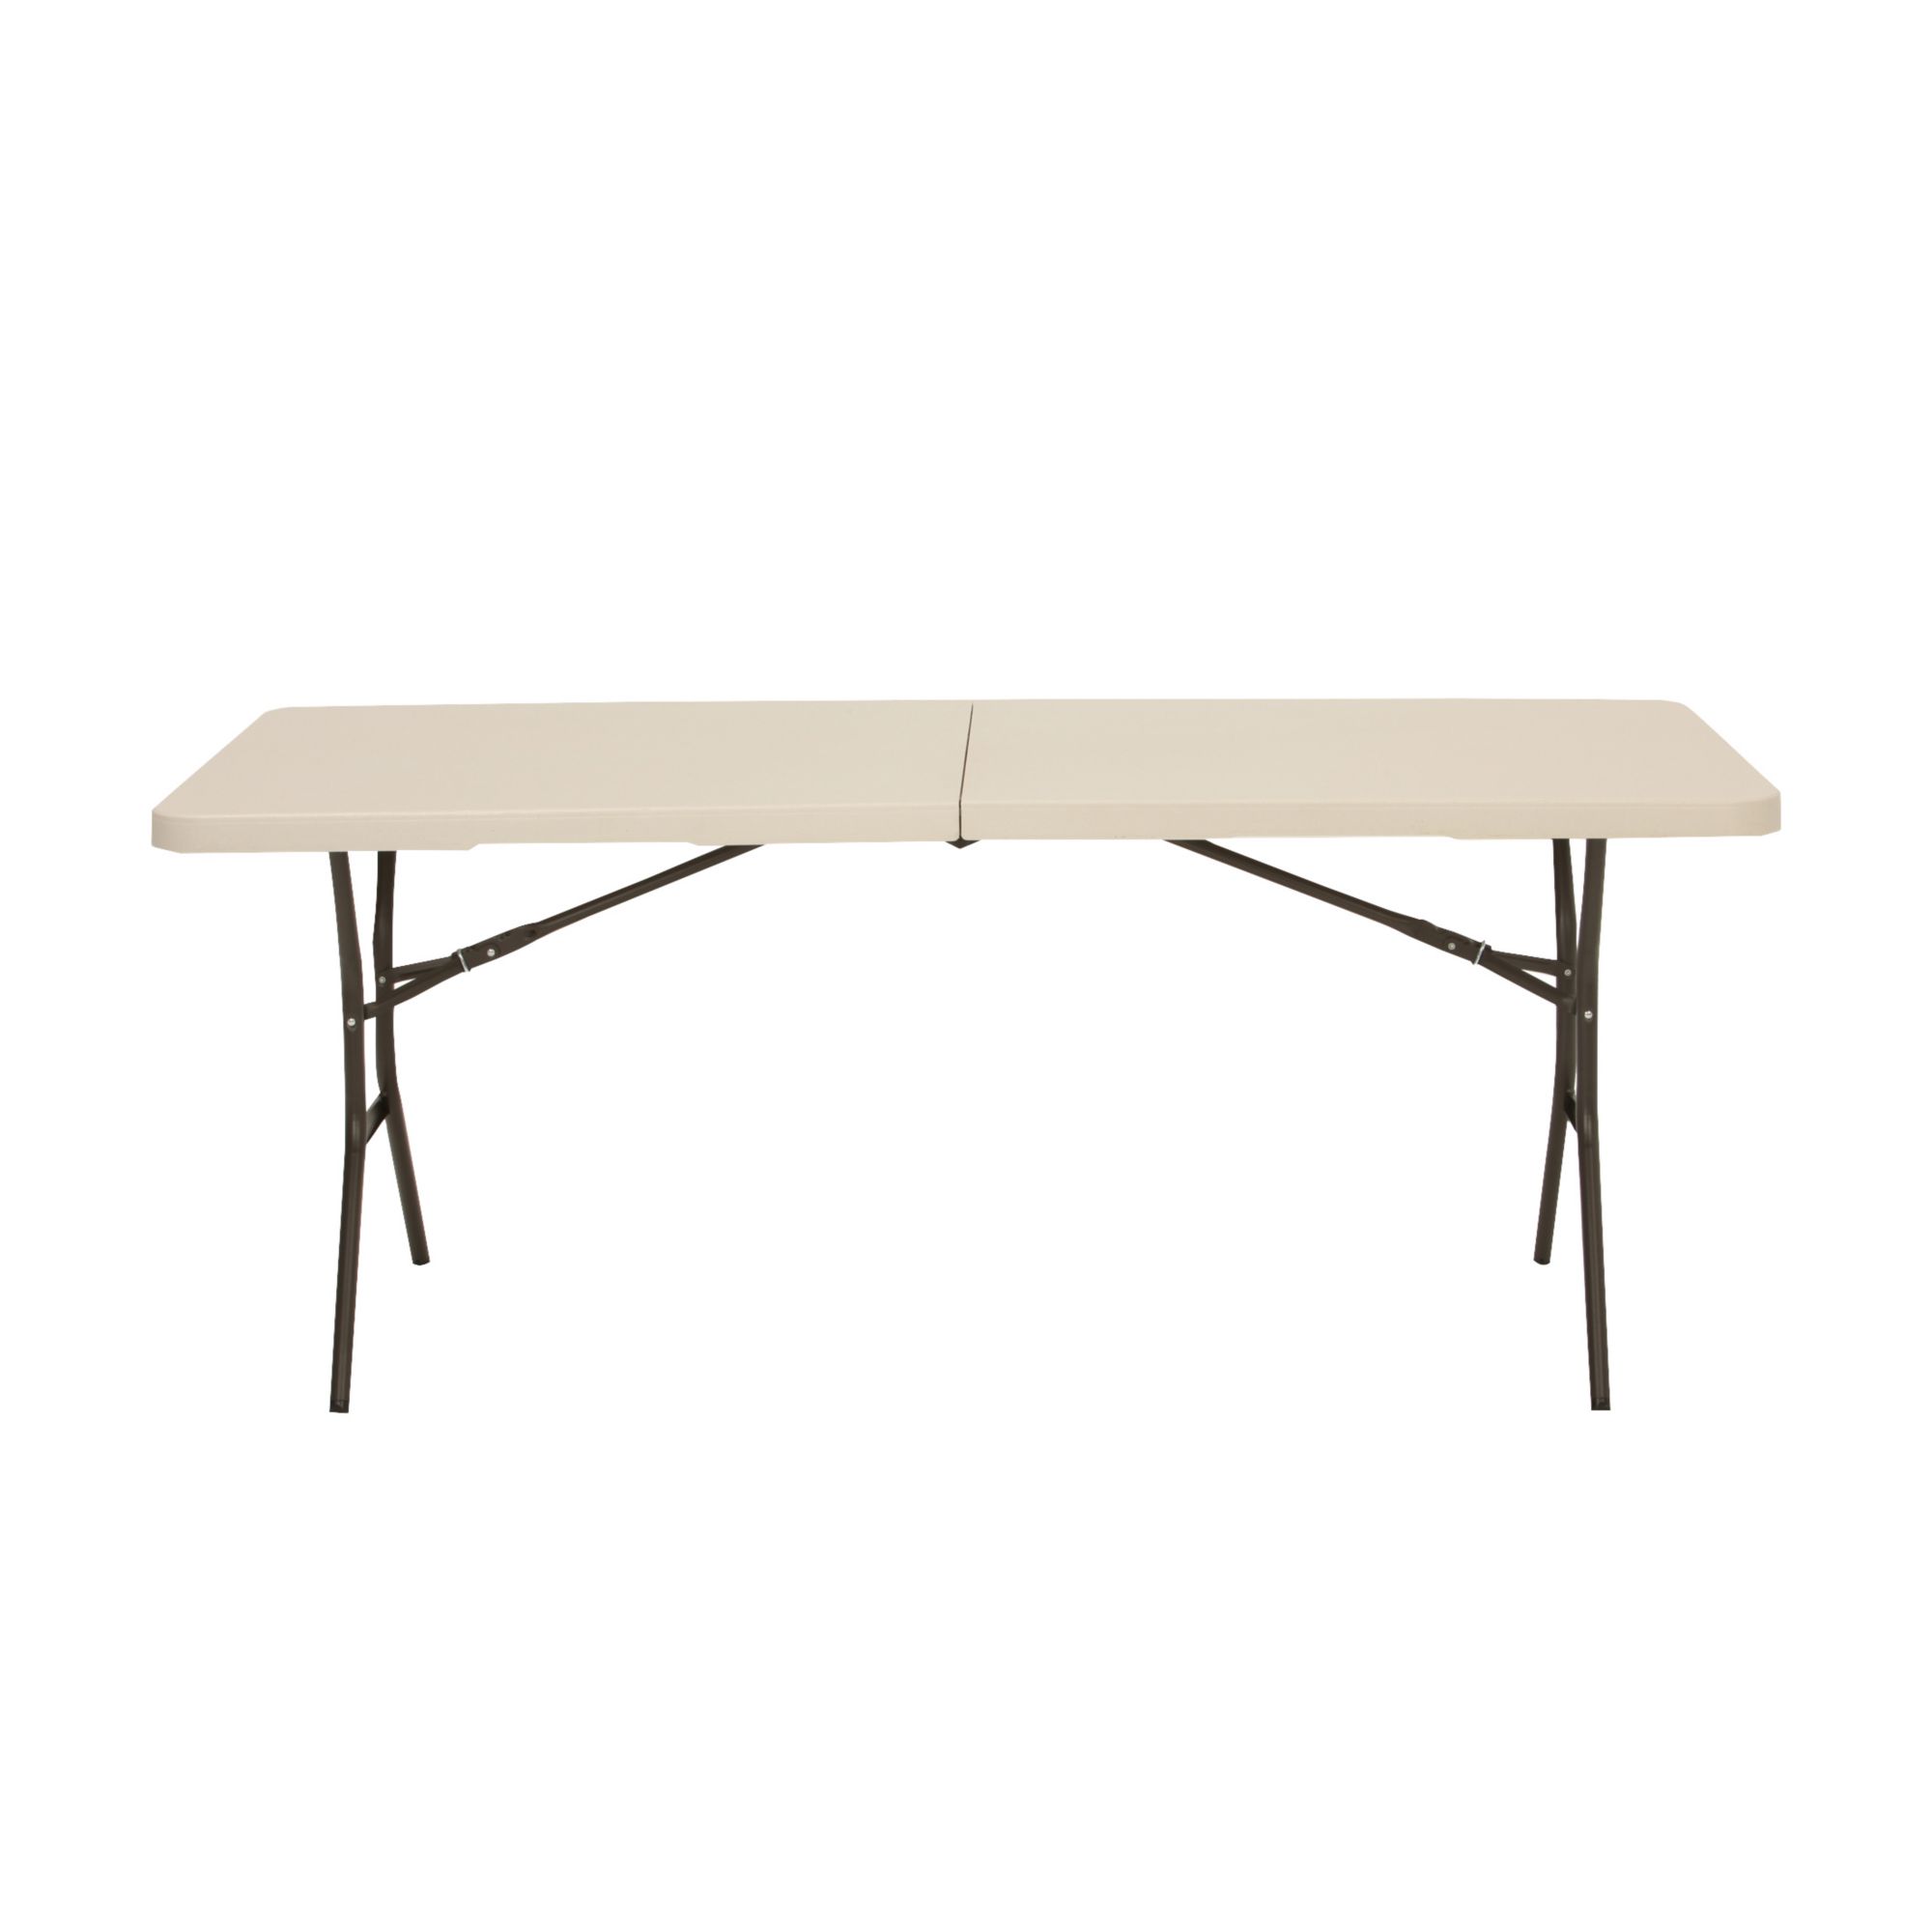 Lifetime 80382 Commercial Fold-in-Half Table, 6-Foot, Almond : :  Patio, Lawn & Garden